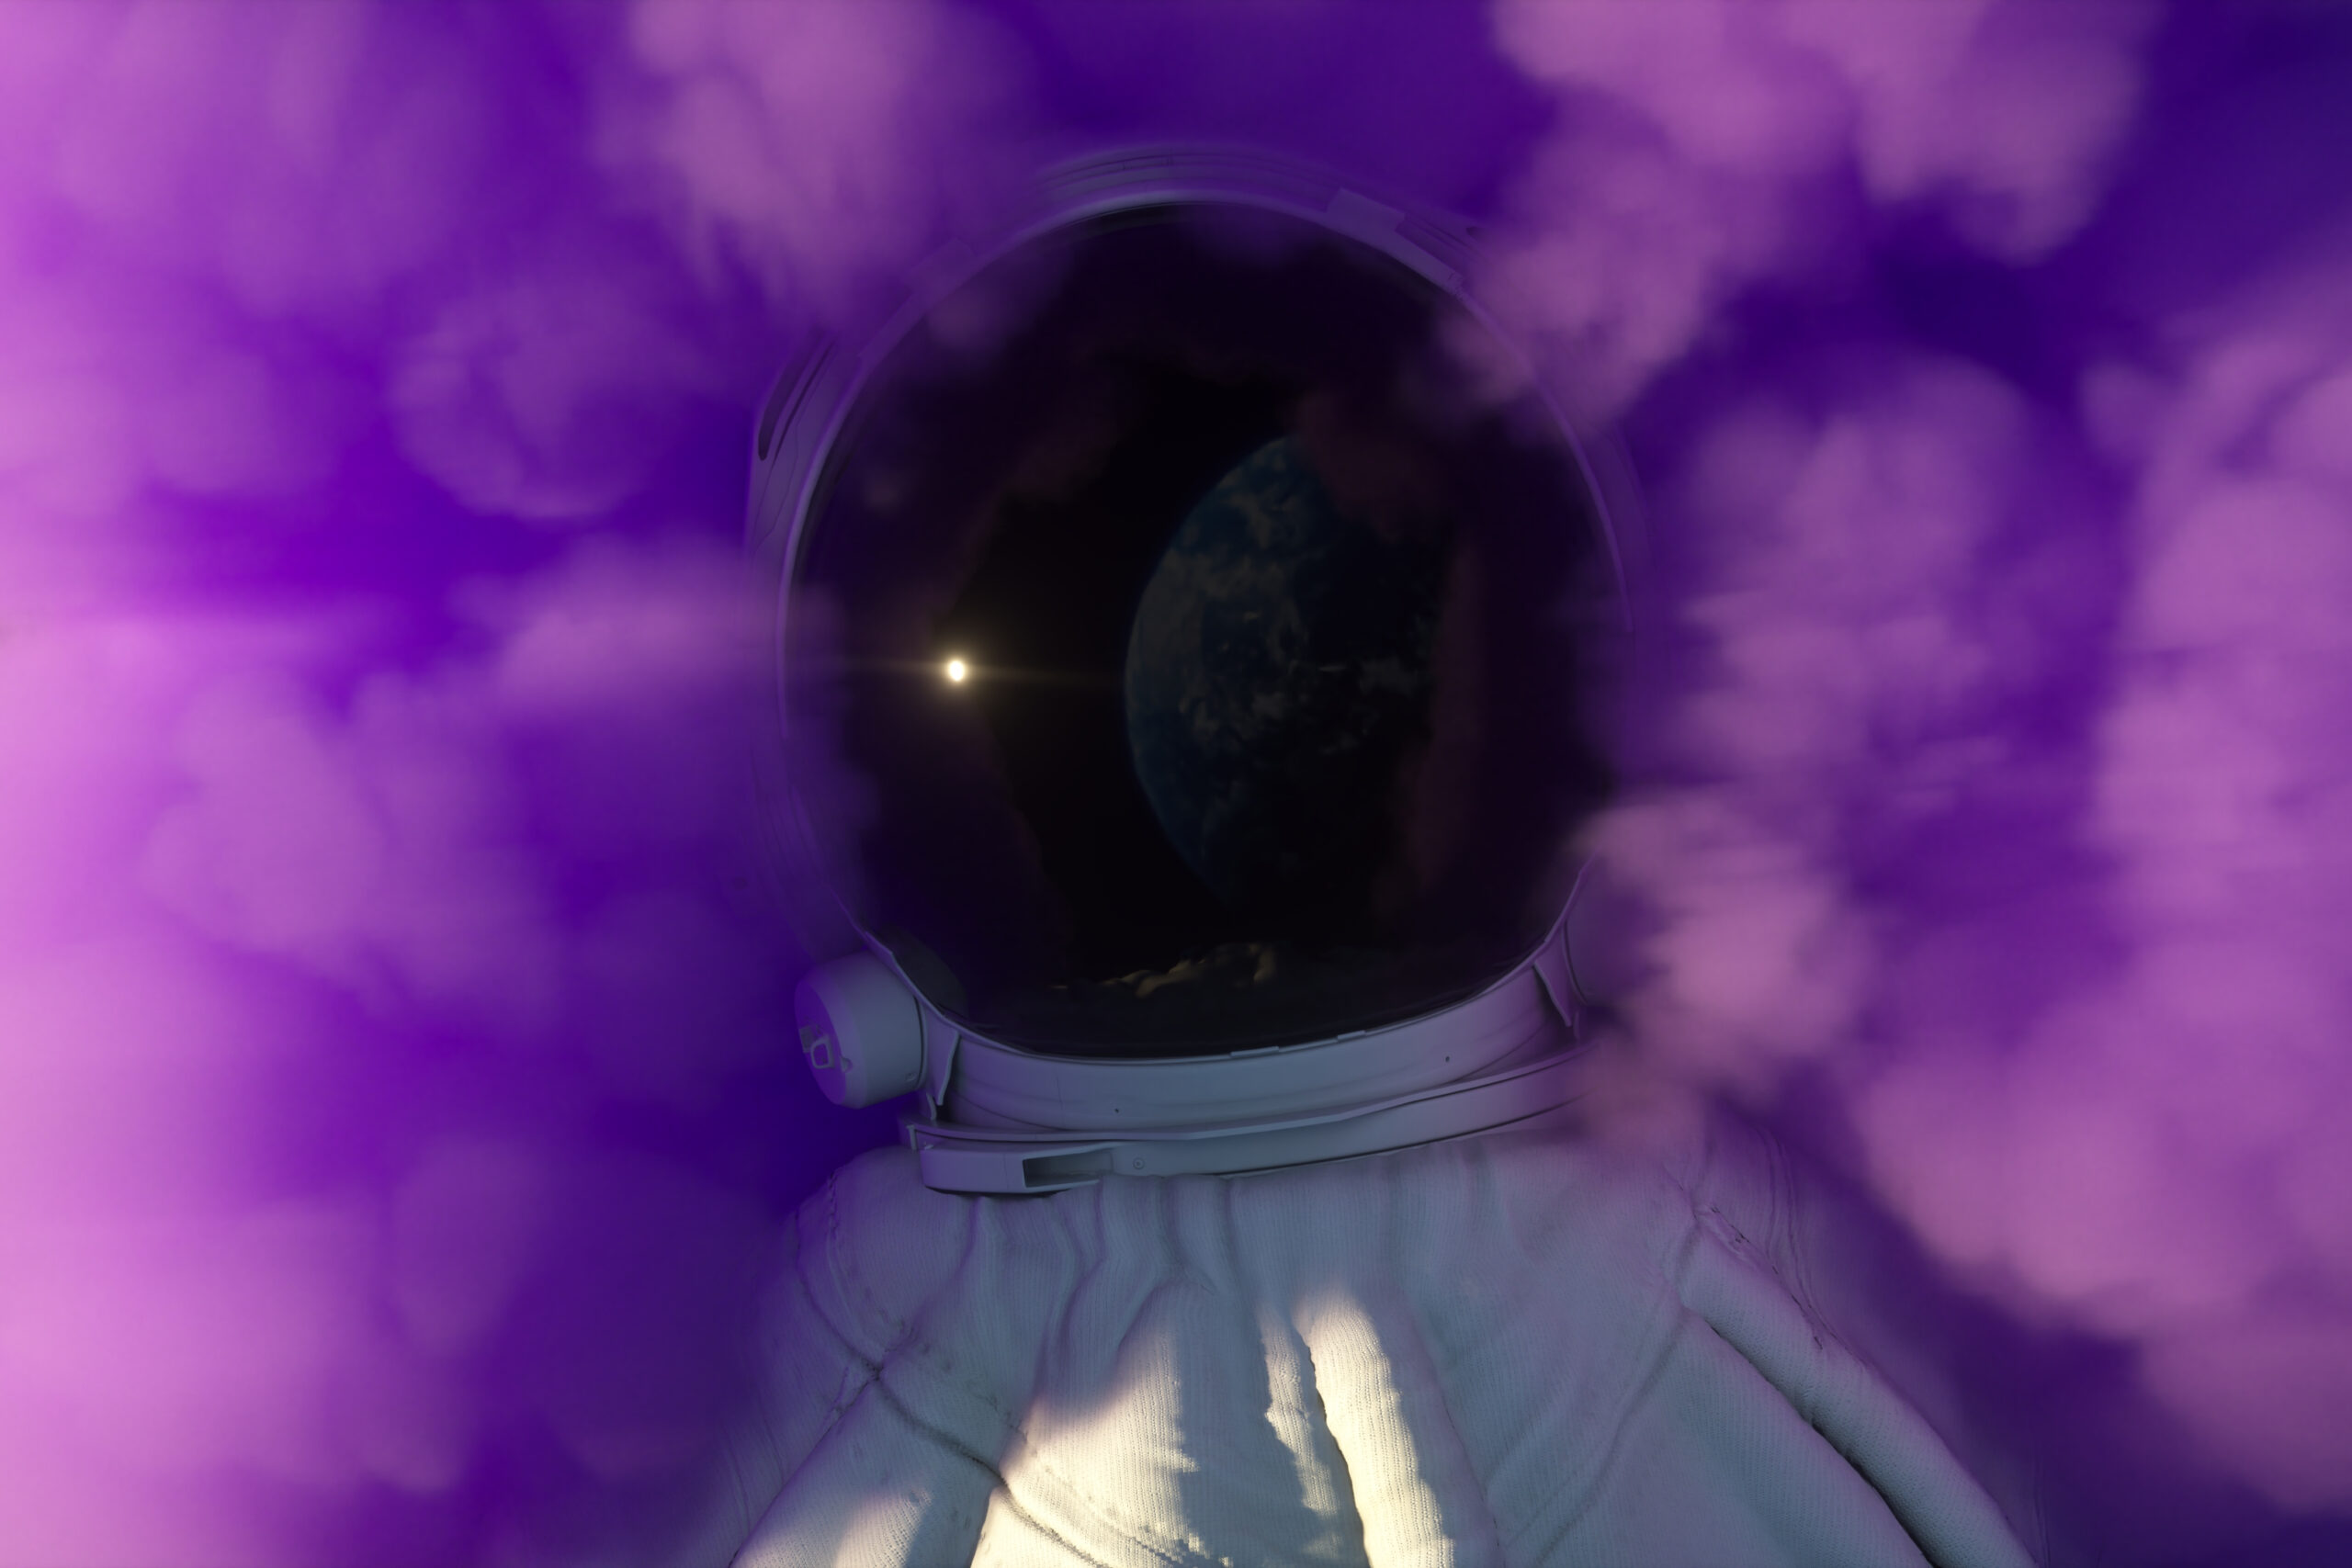 An astronaut laying in a cloud of purple smoke